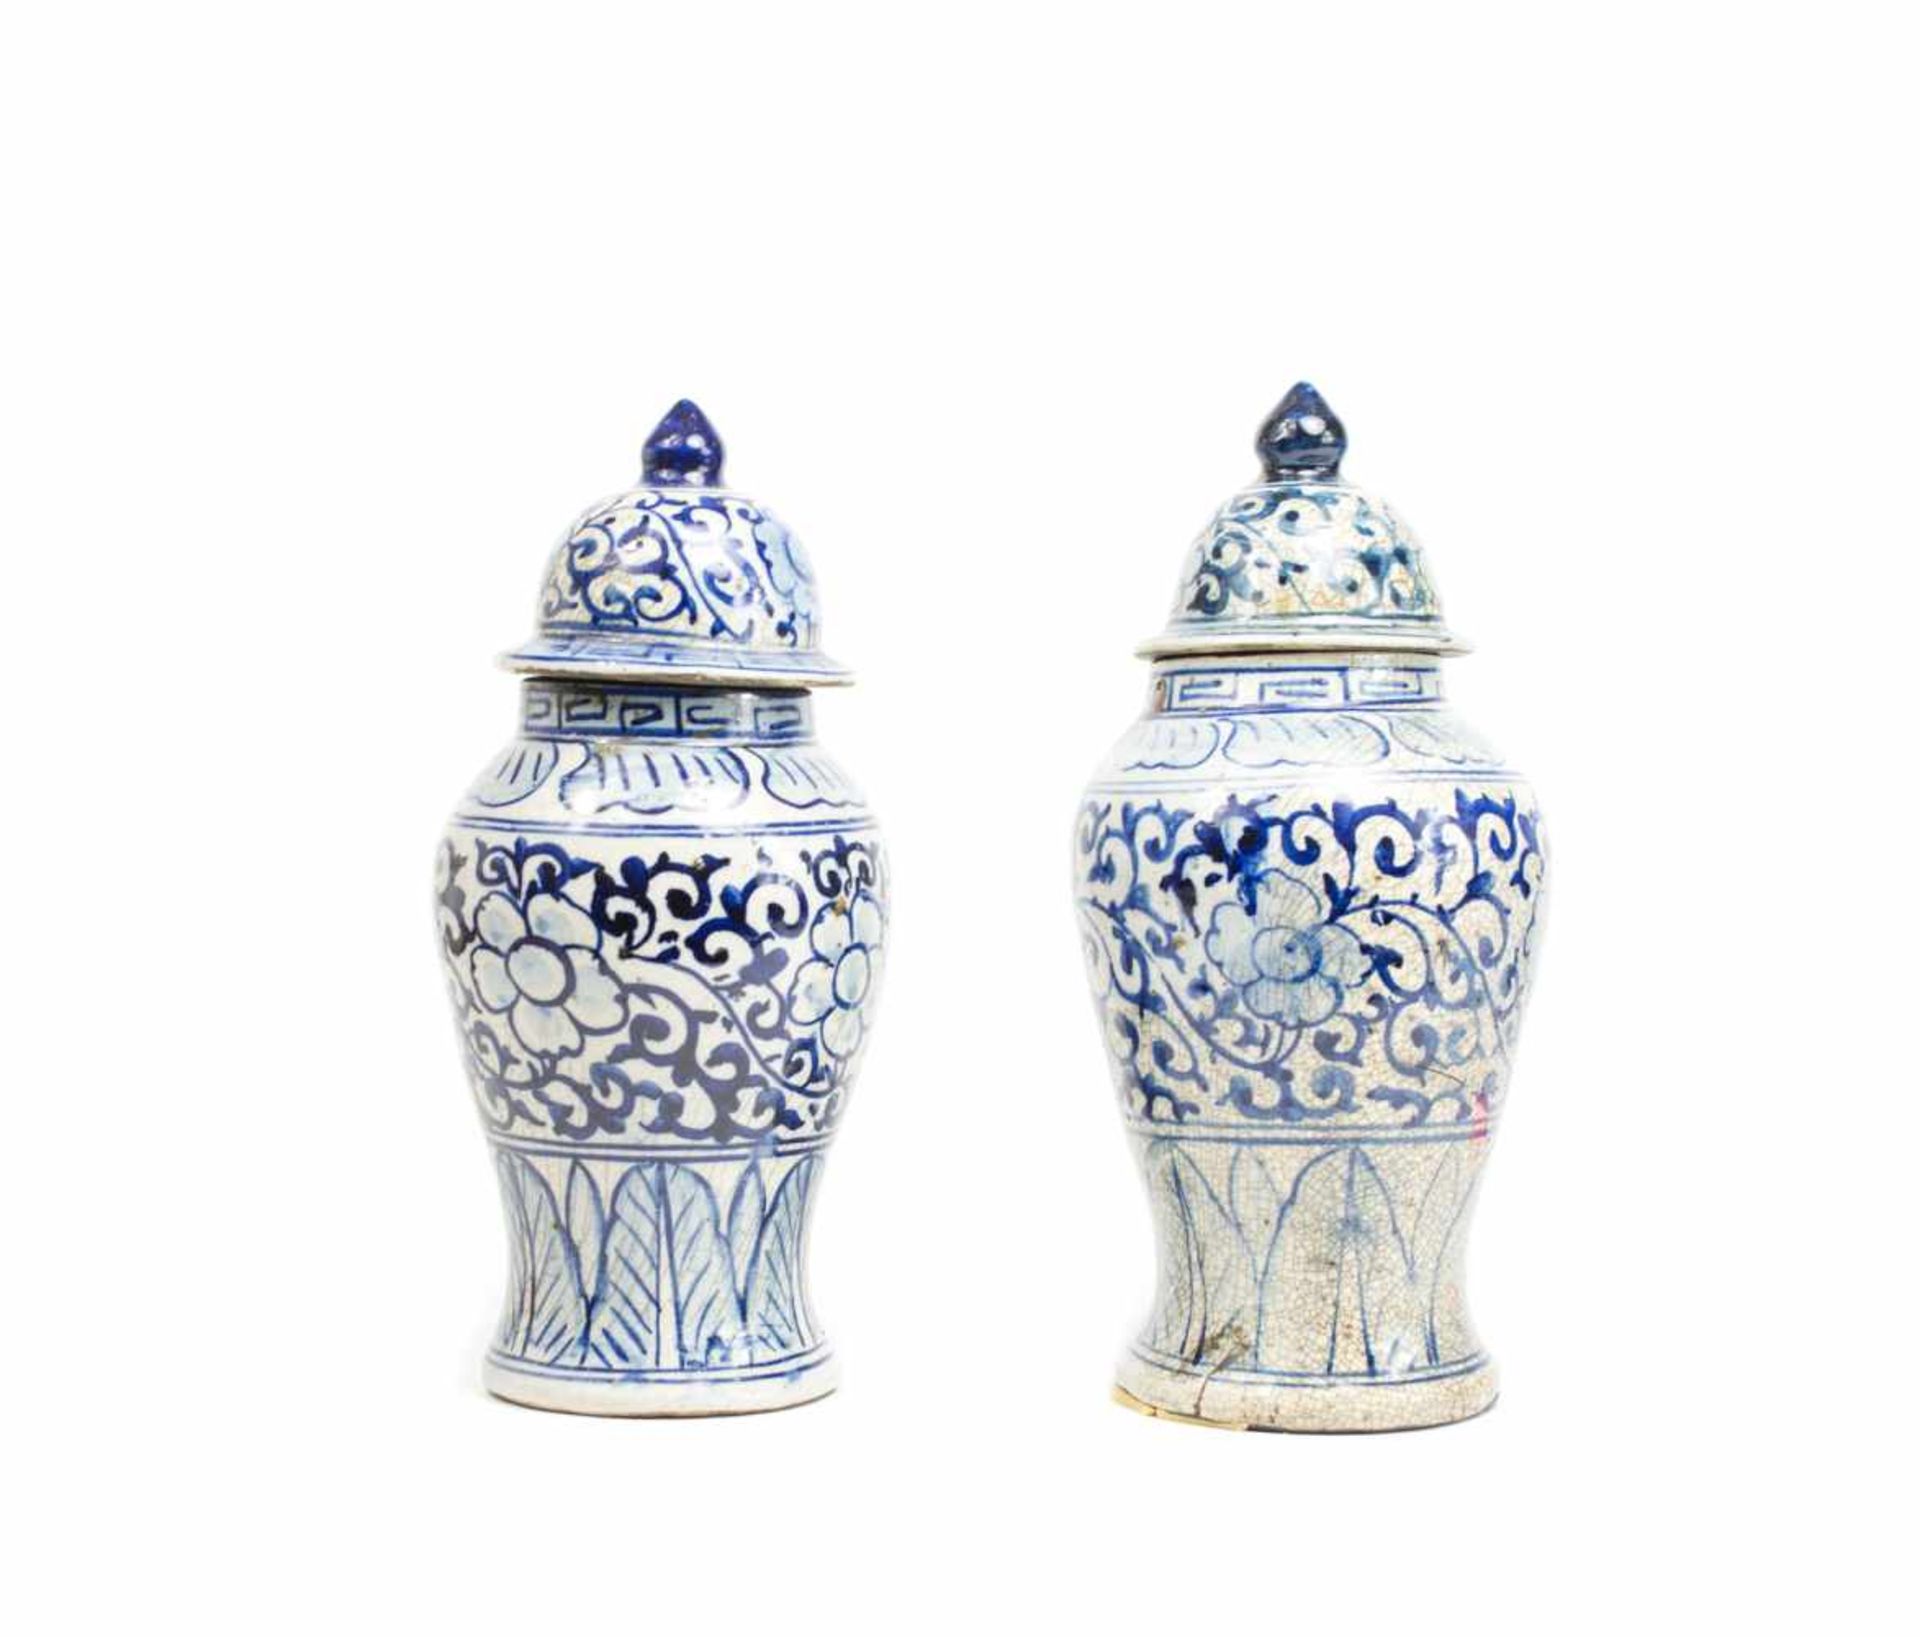 Paar DeckelpokalvasenChina, 19./20. Jh., Keramik, blaue Unterglasurbemalung, umlaufend mit Blumen-